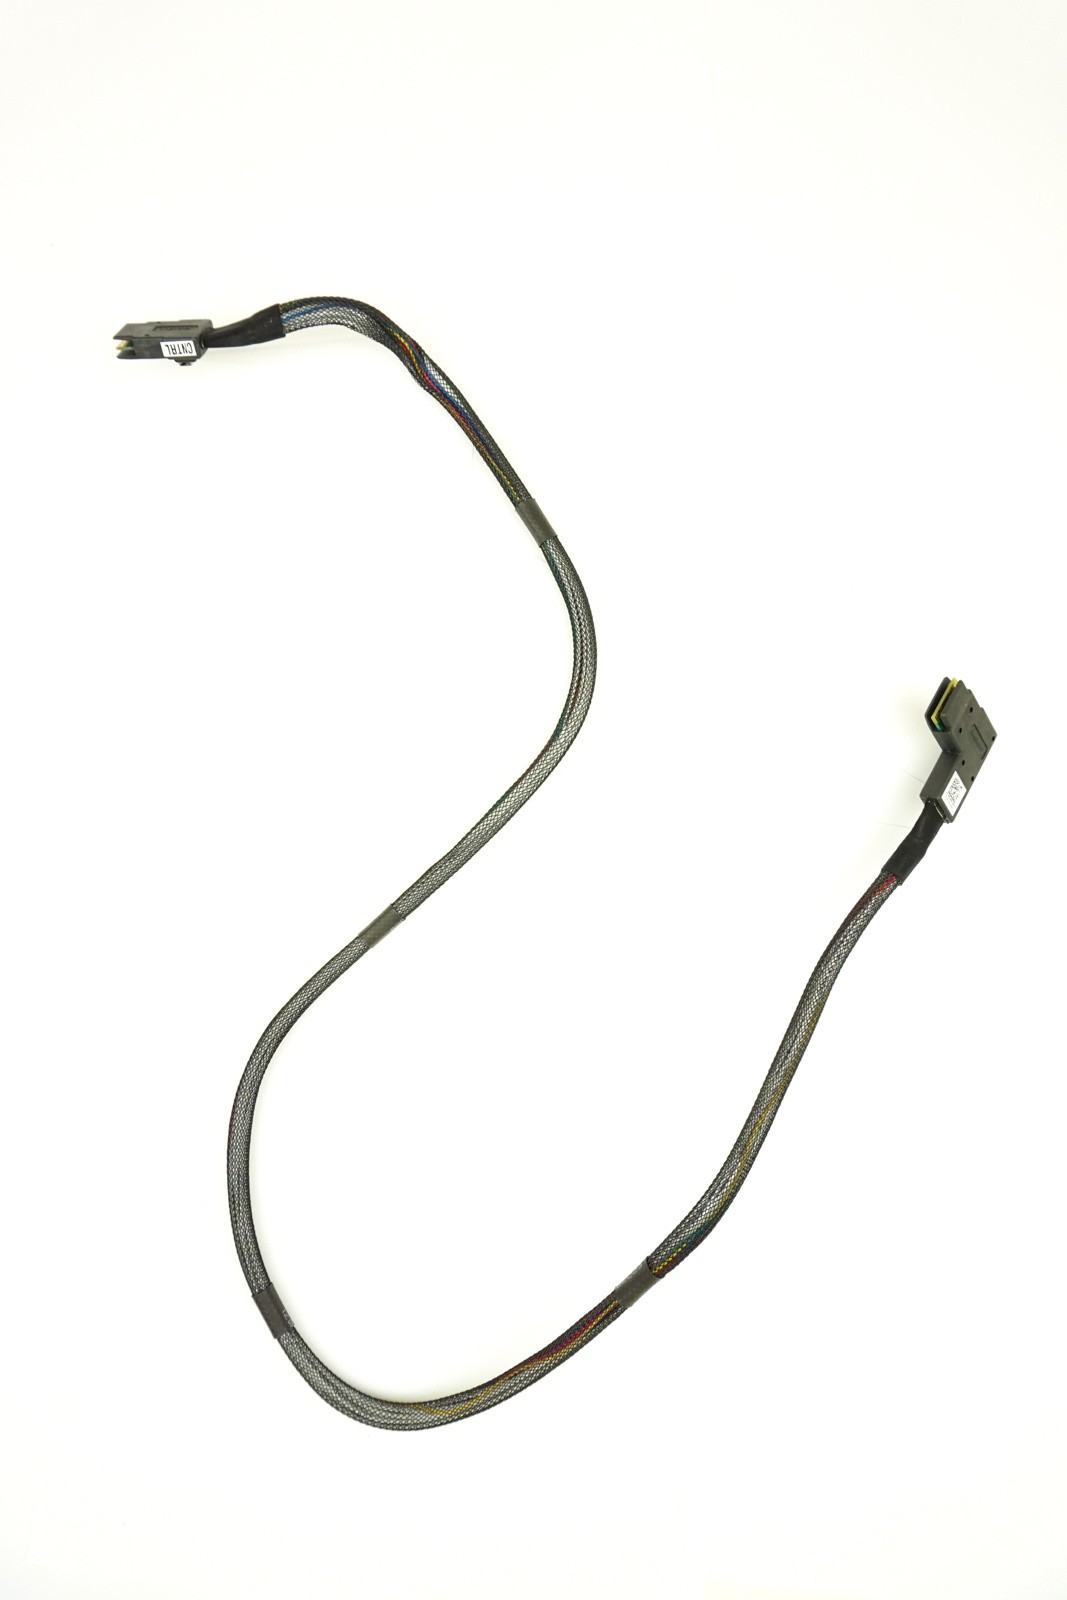 Dell PowerEdge R610 - Mini-SAS A/B to Hxxx Cable 29"